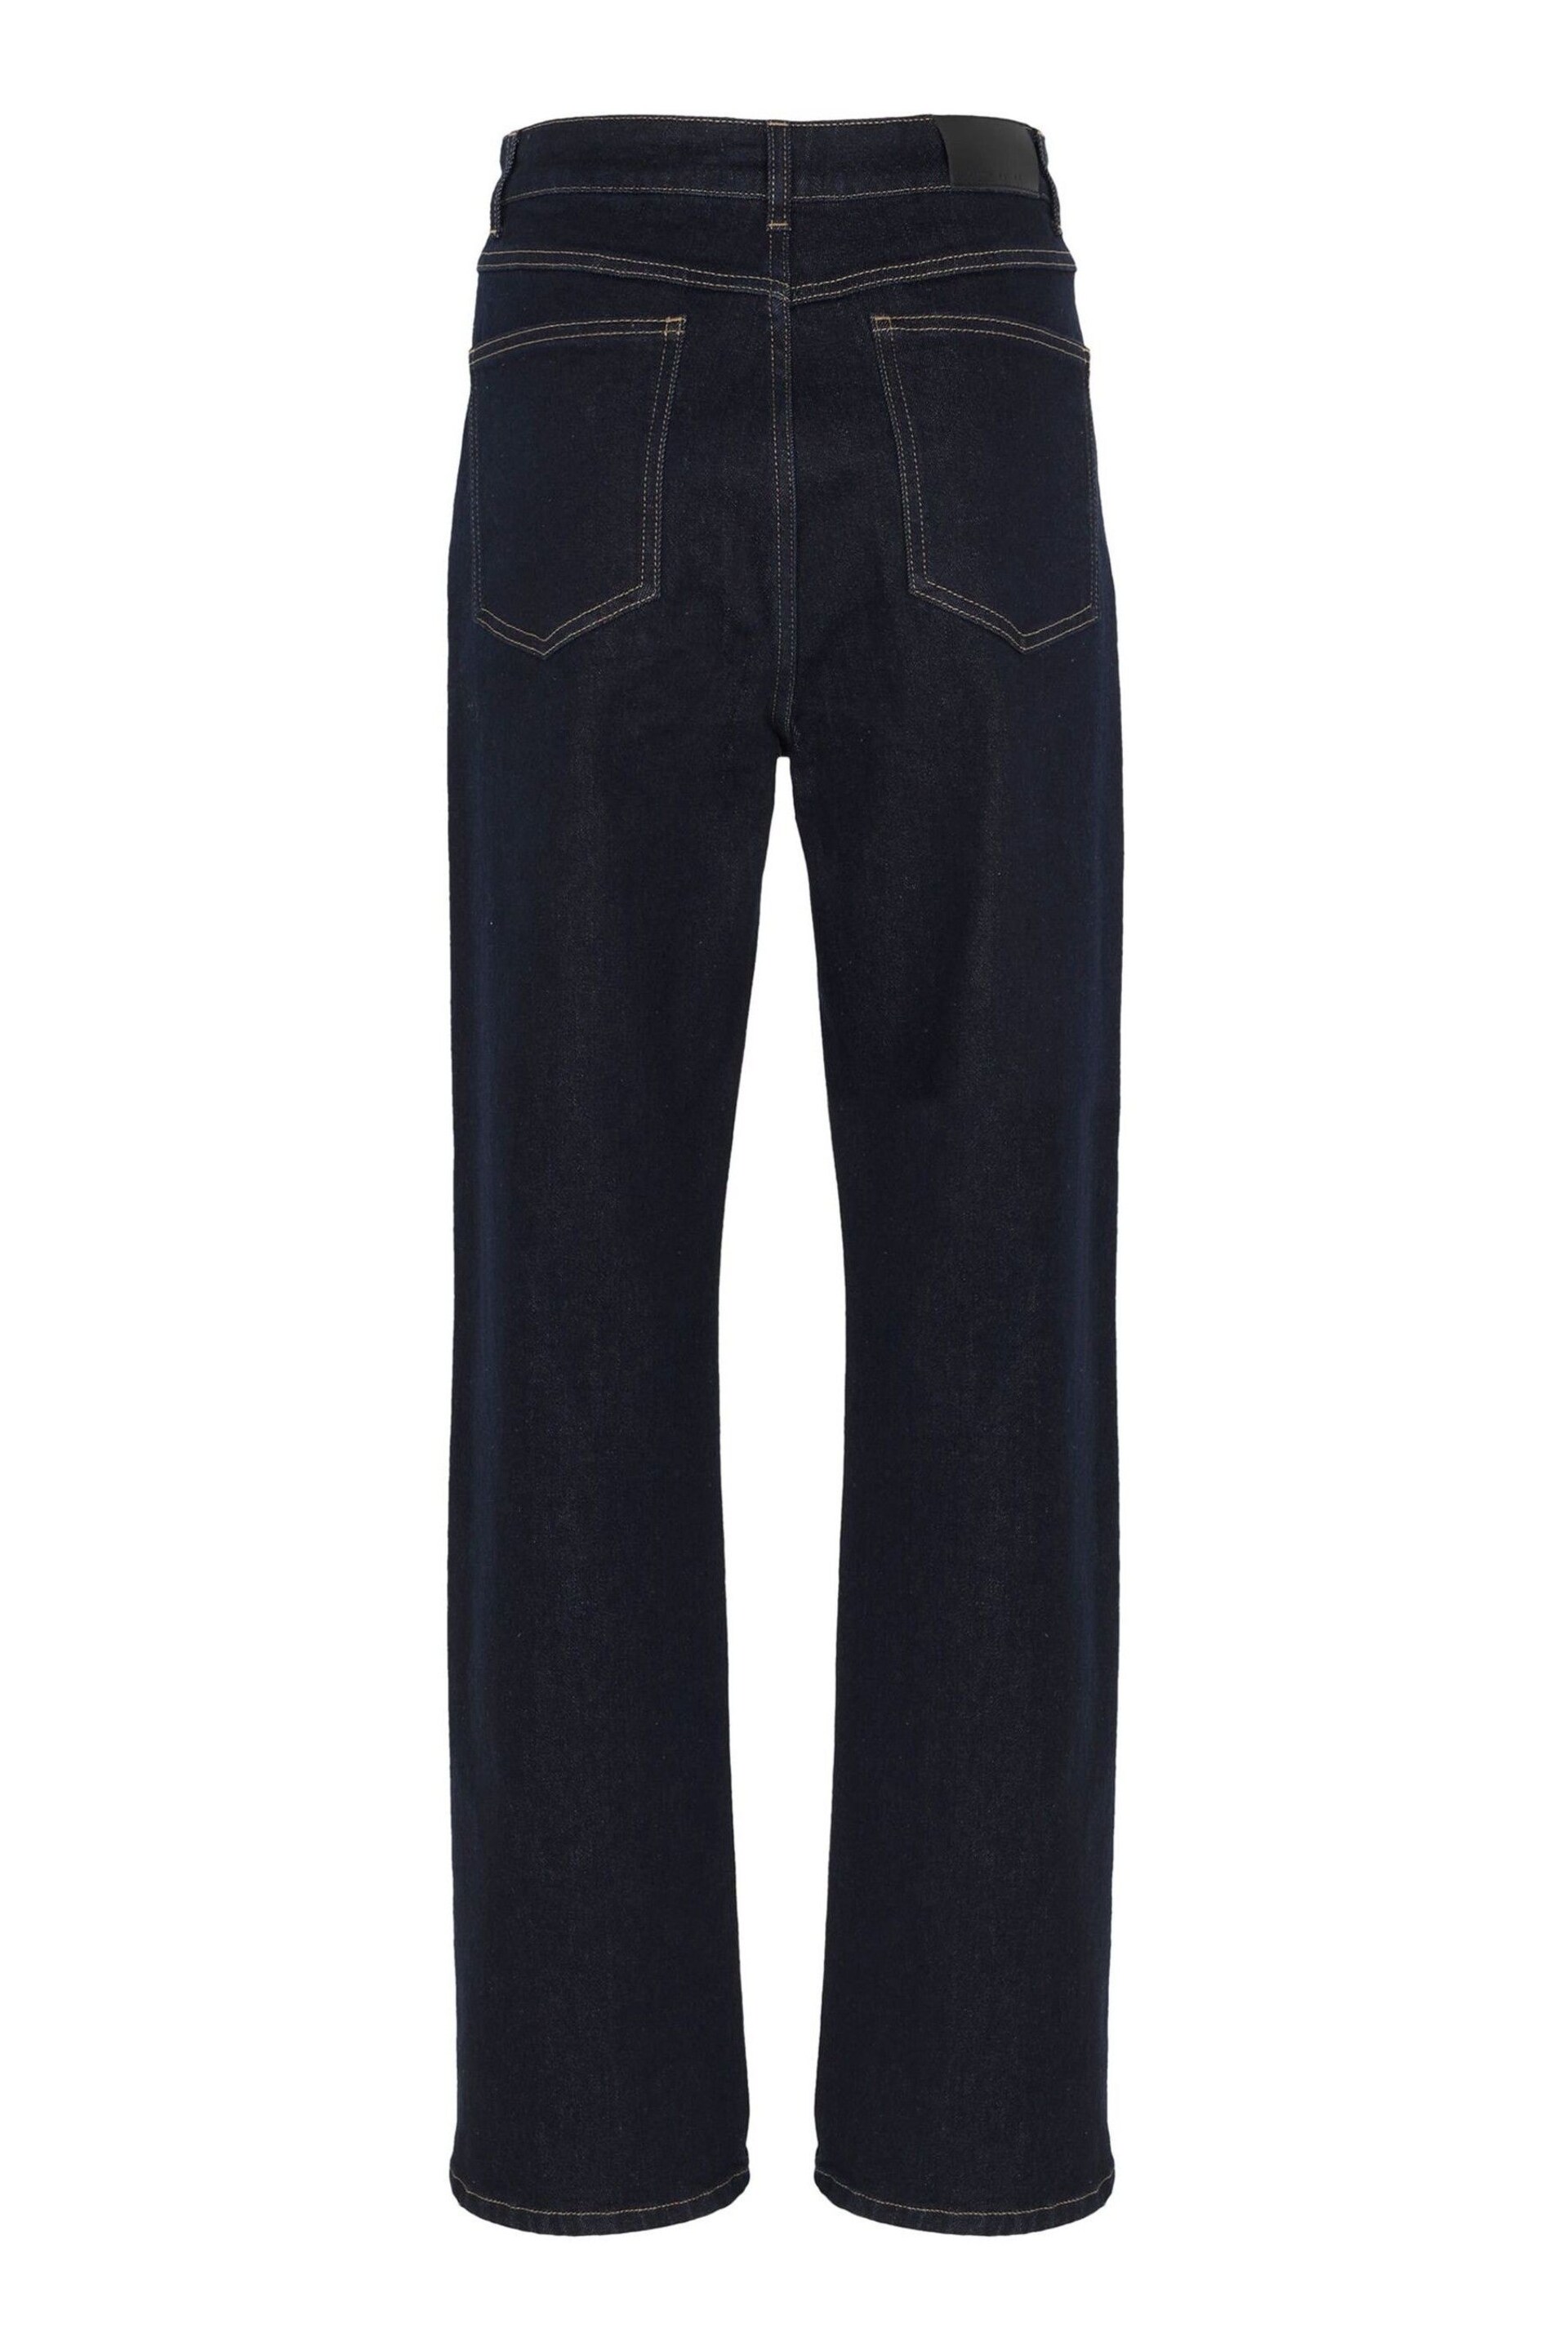 Mint Velvet Blue Dark Indigo Wide Jeans - Image 4 of 4